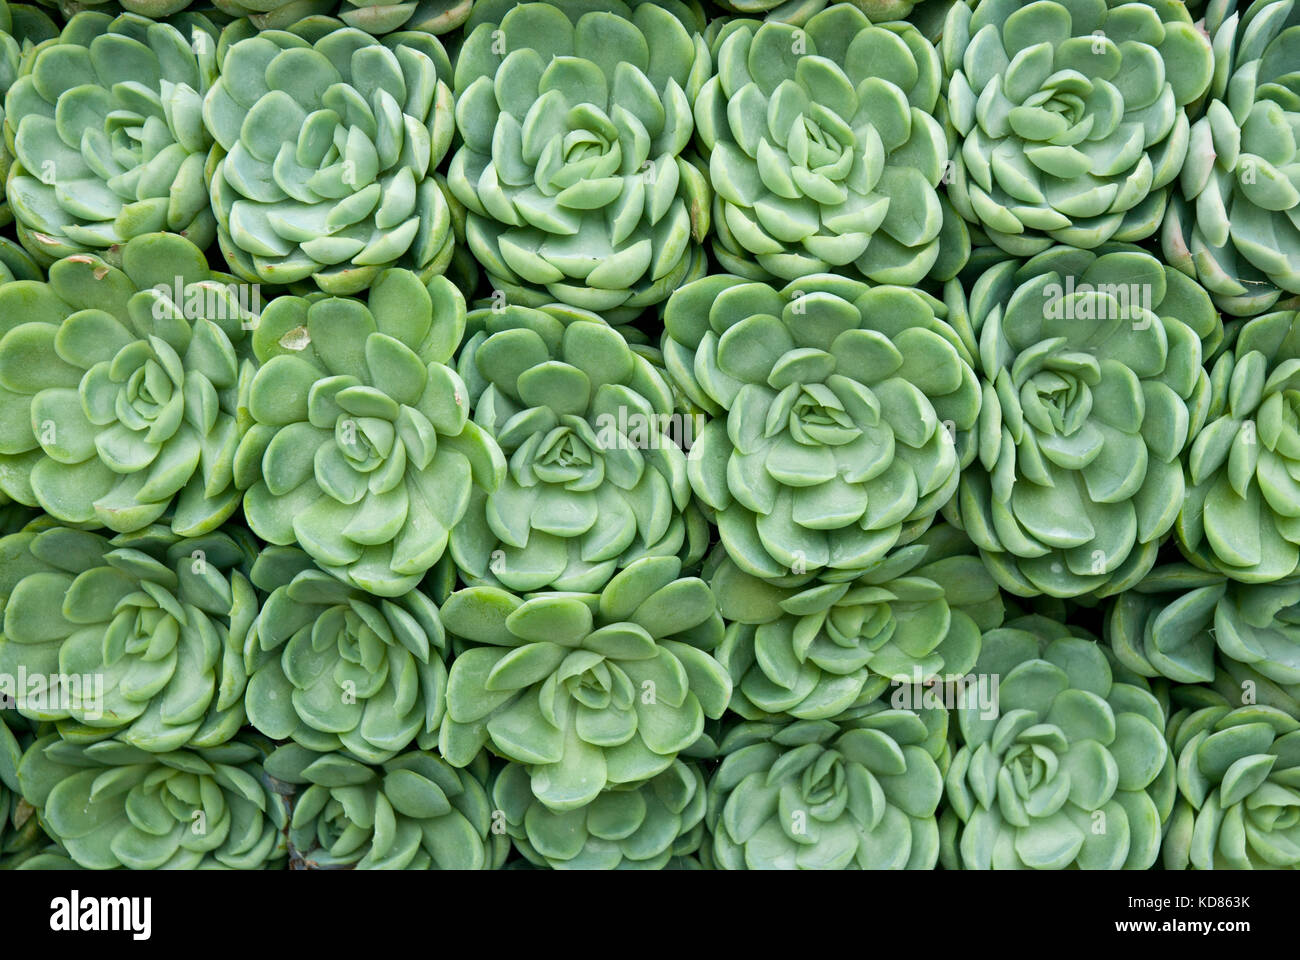 Sukkulenten in den Reihen der Grünen Rosetten bilden ein abstraktes Muster Stockfoto